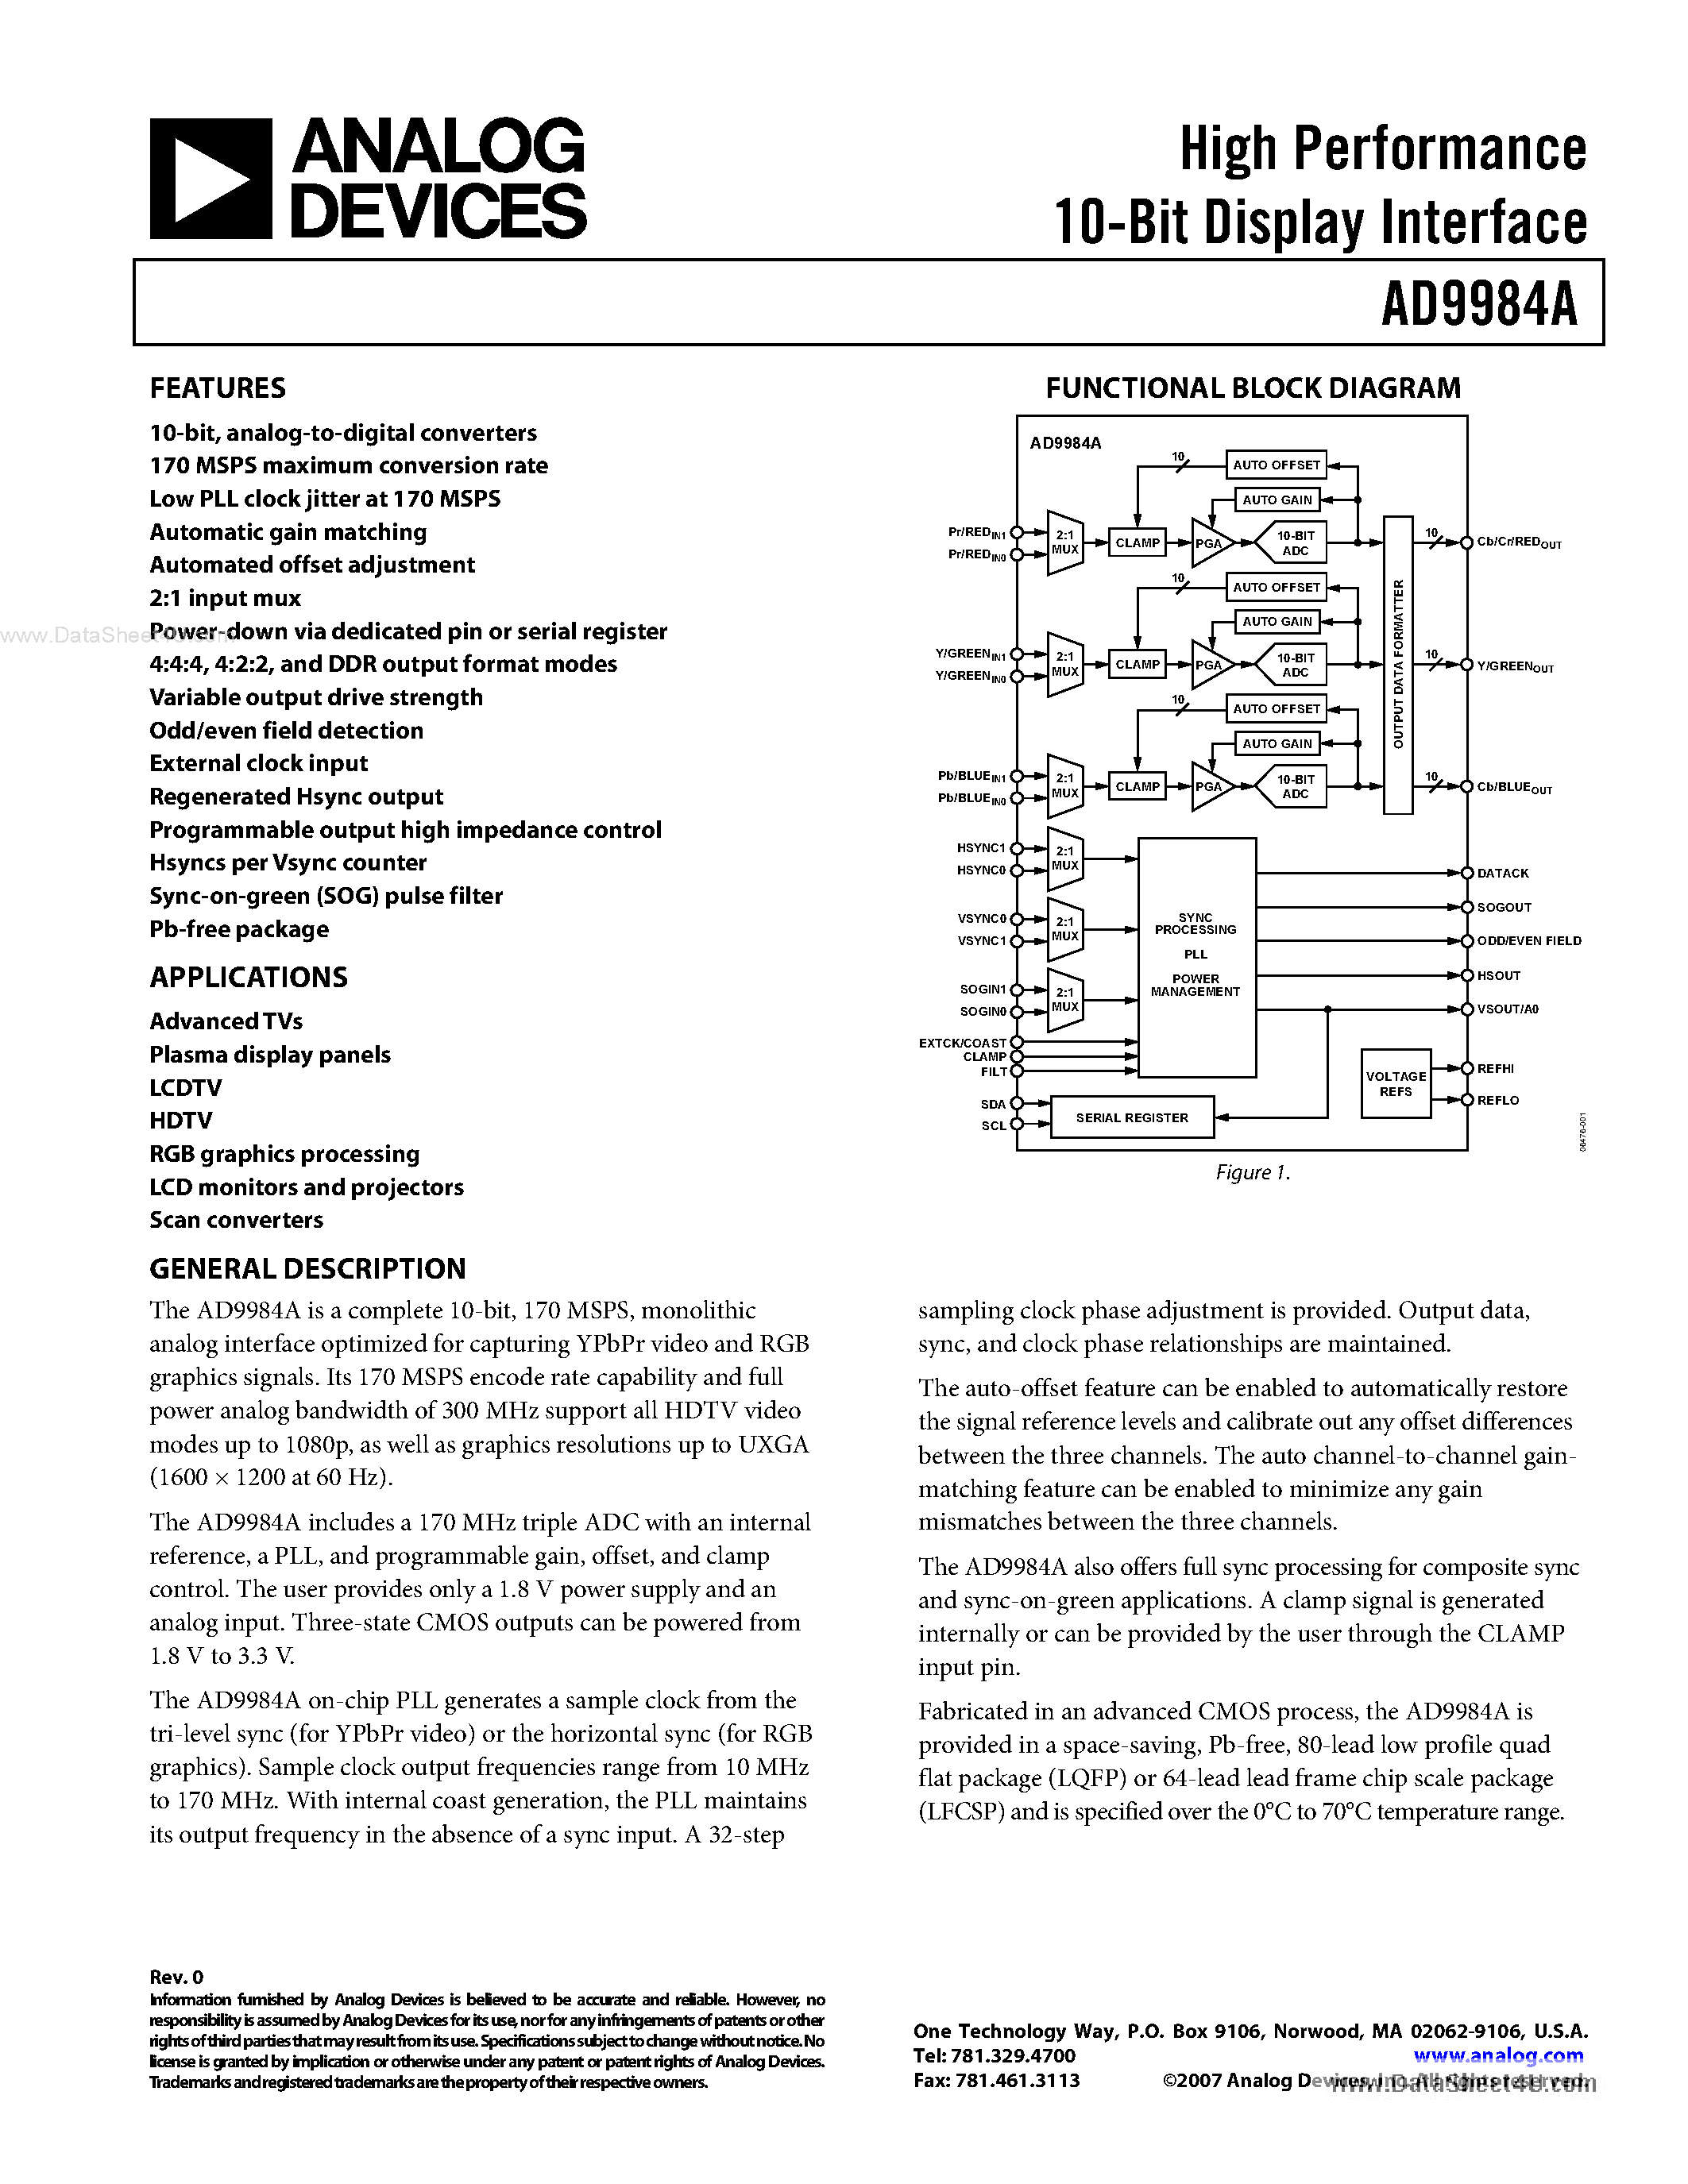 Даташит AD9984A - High Performance 10-Bit Display Interface страница 1